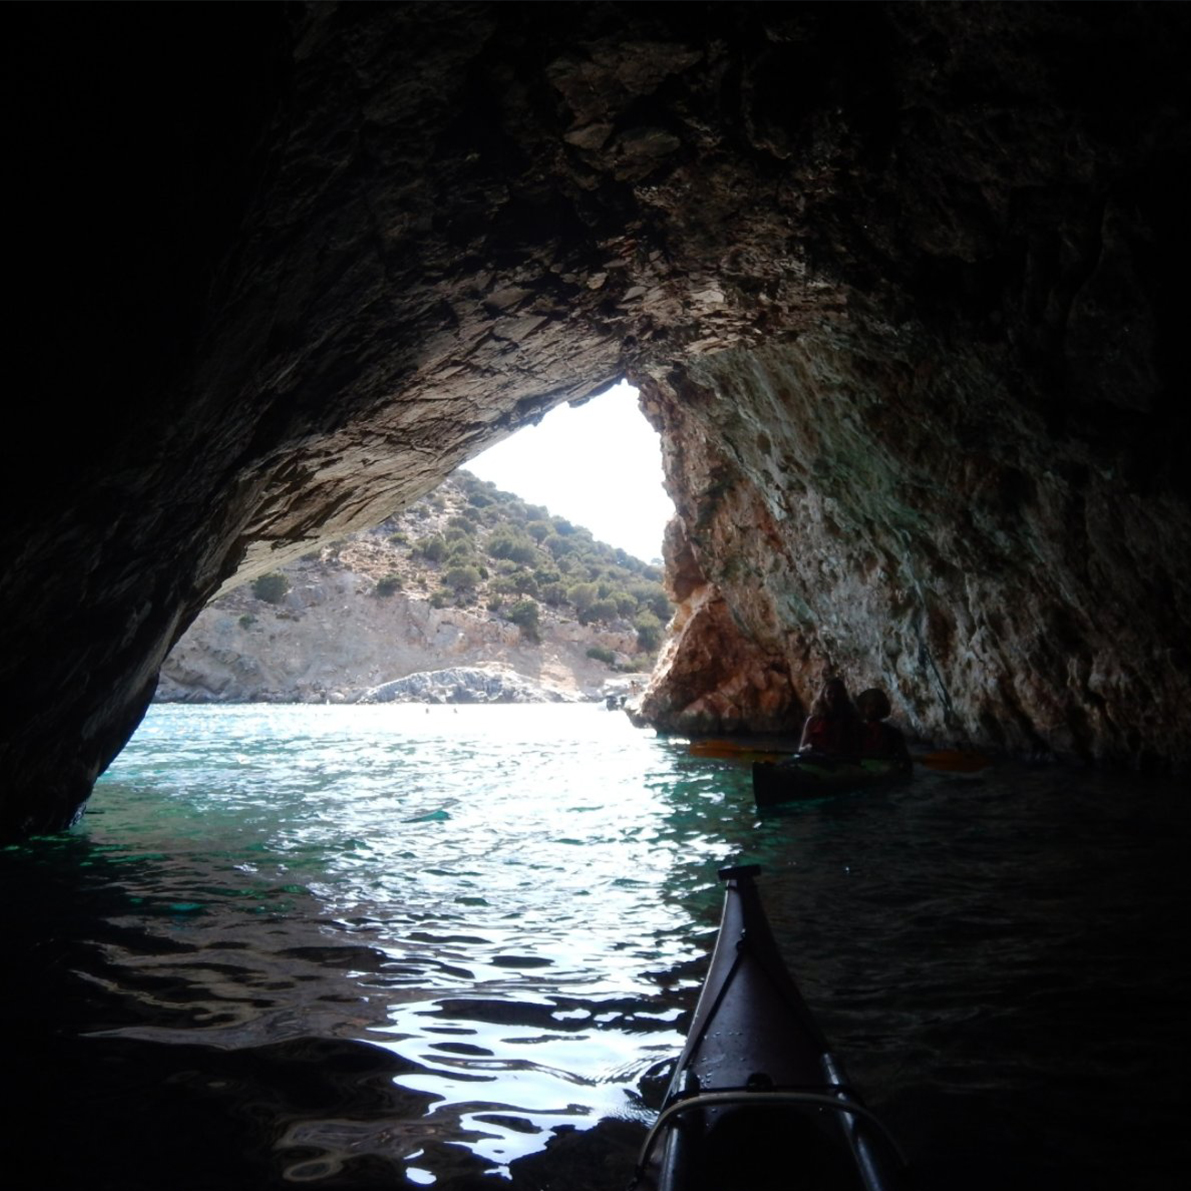 Sea Kayak Naxos - Sea Kayak Tours